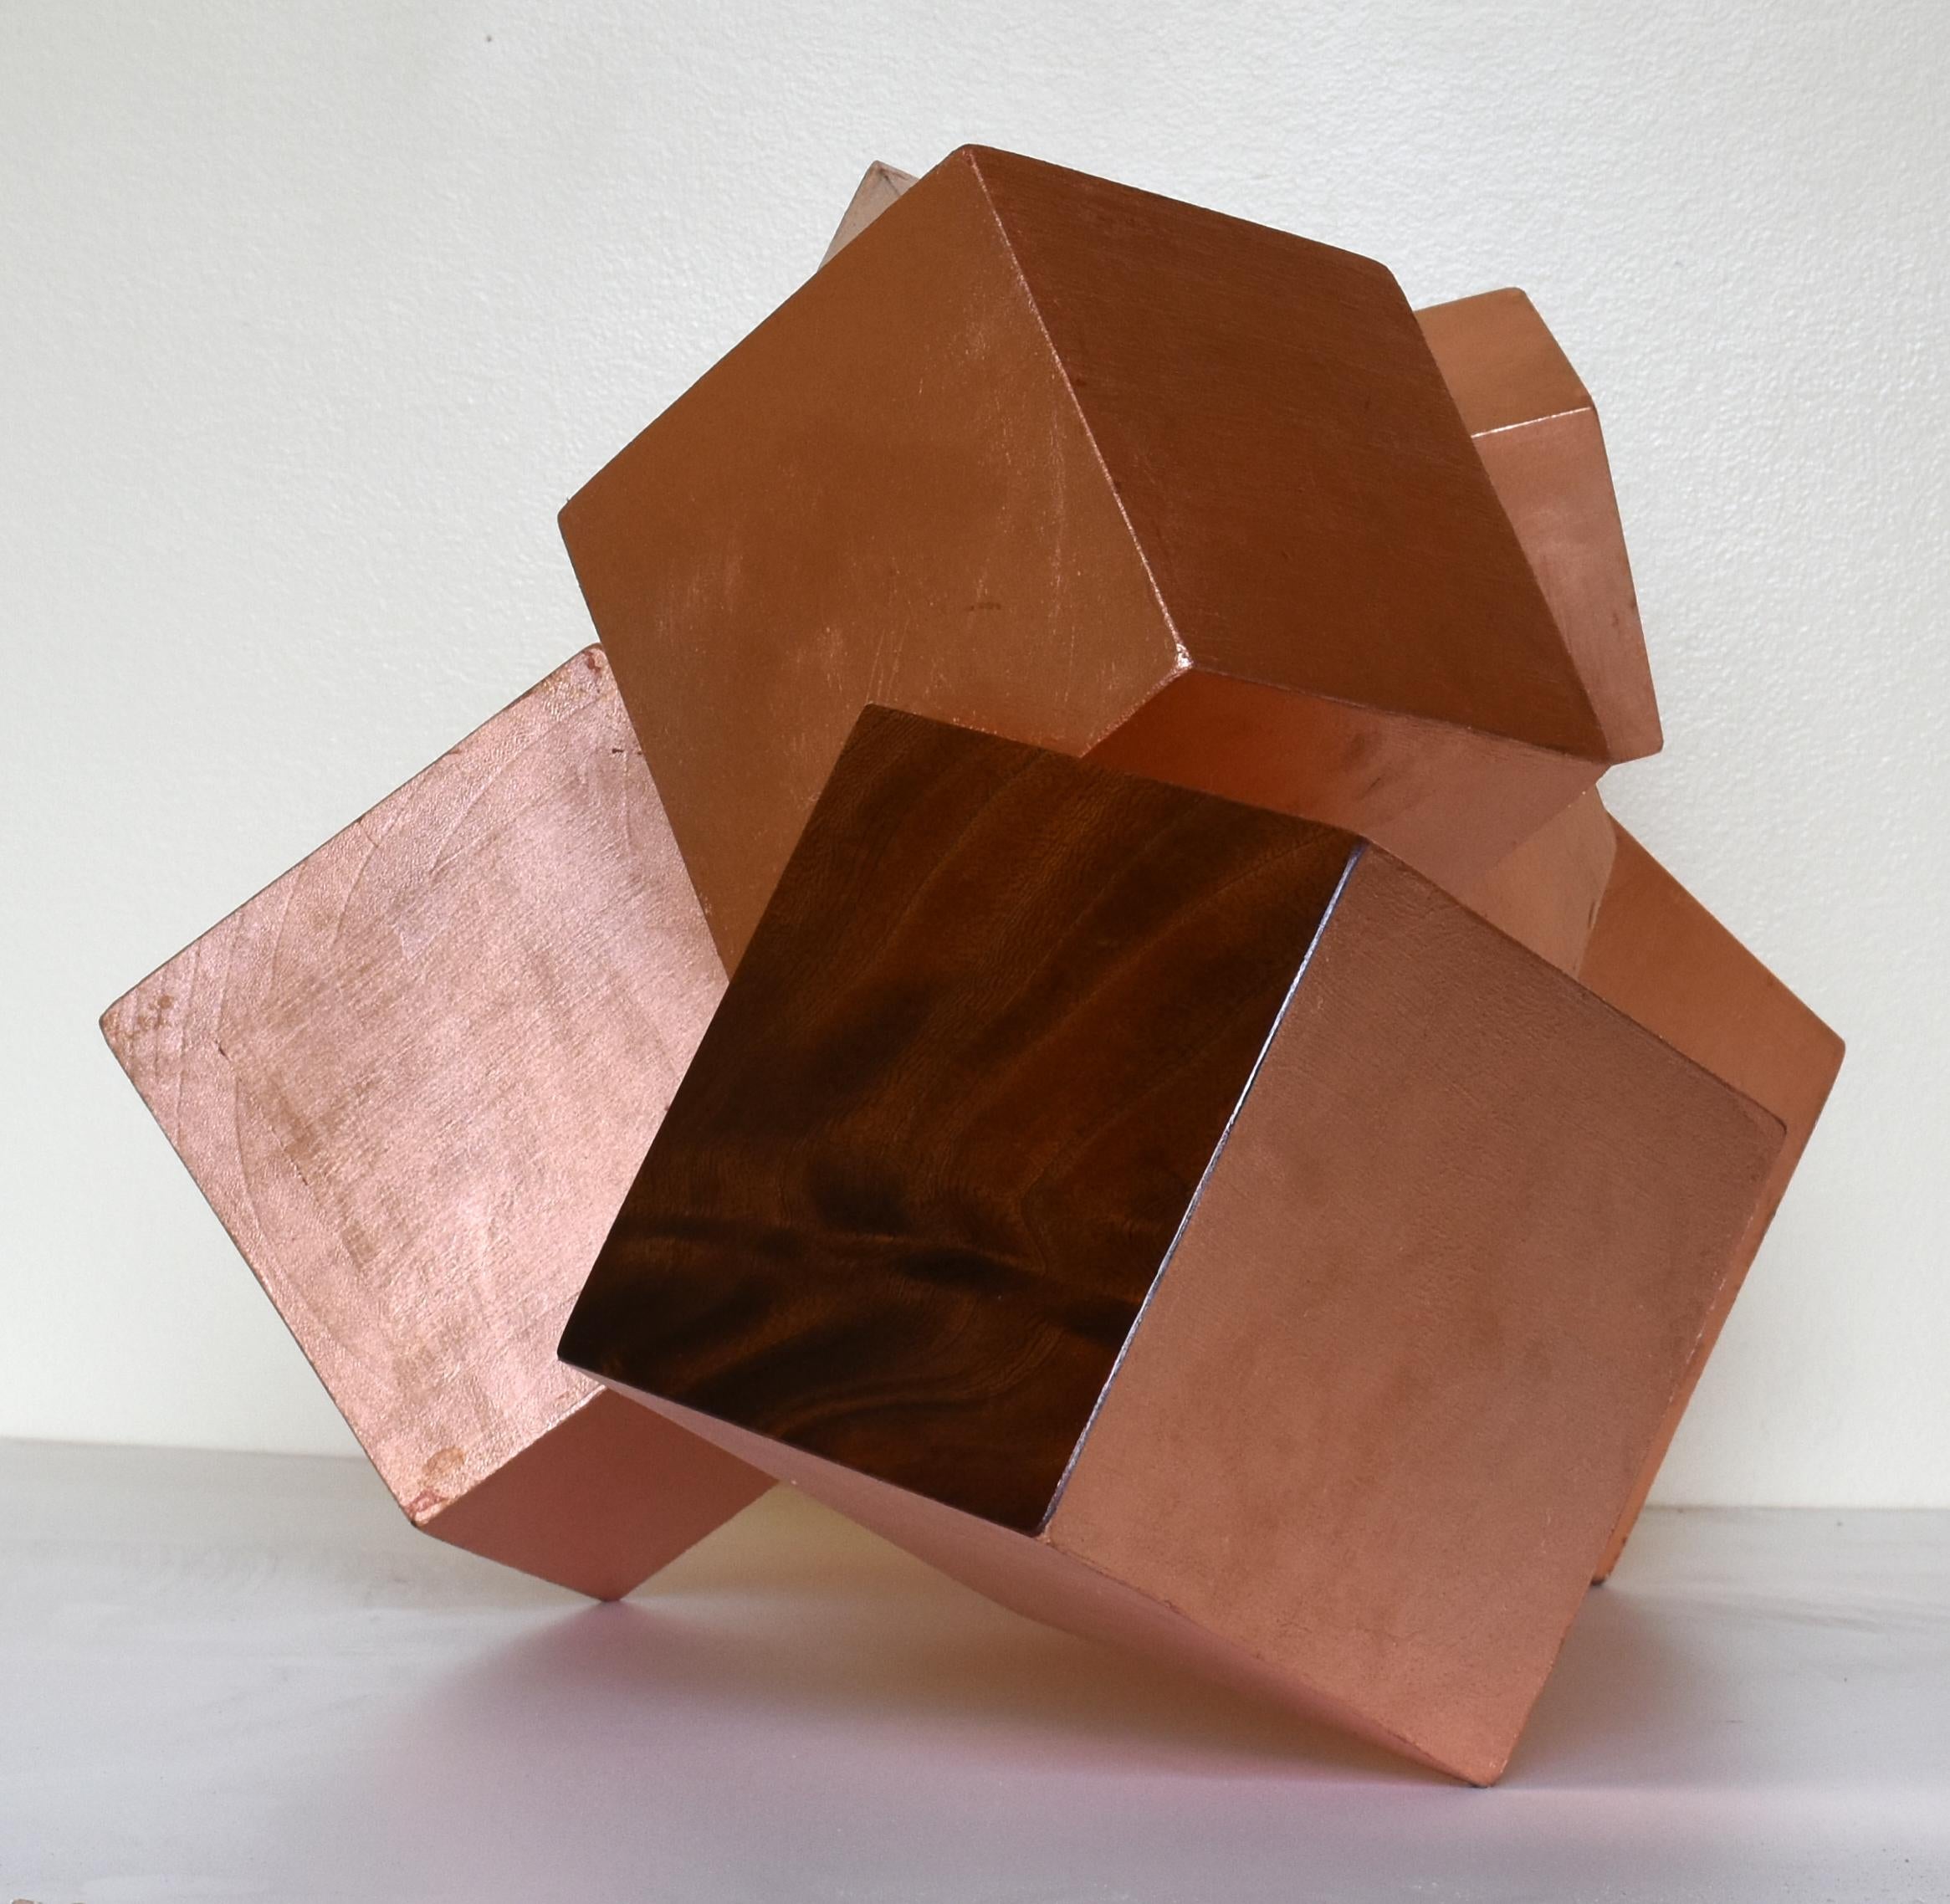 Copper and Mahogany Pyrite (exotic wood, metallic, cubic, table top sculpture) 6